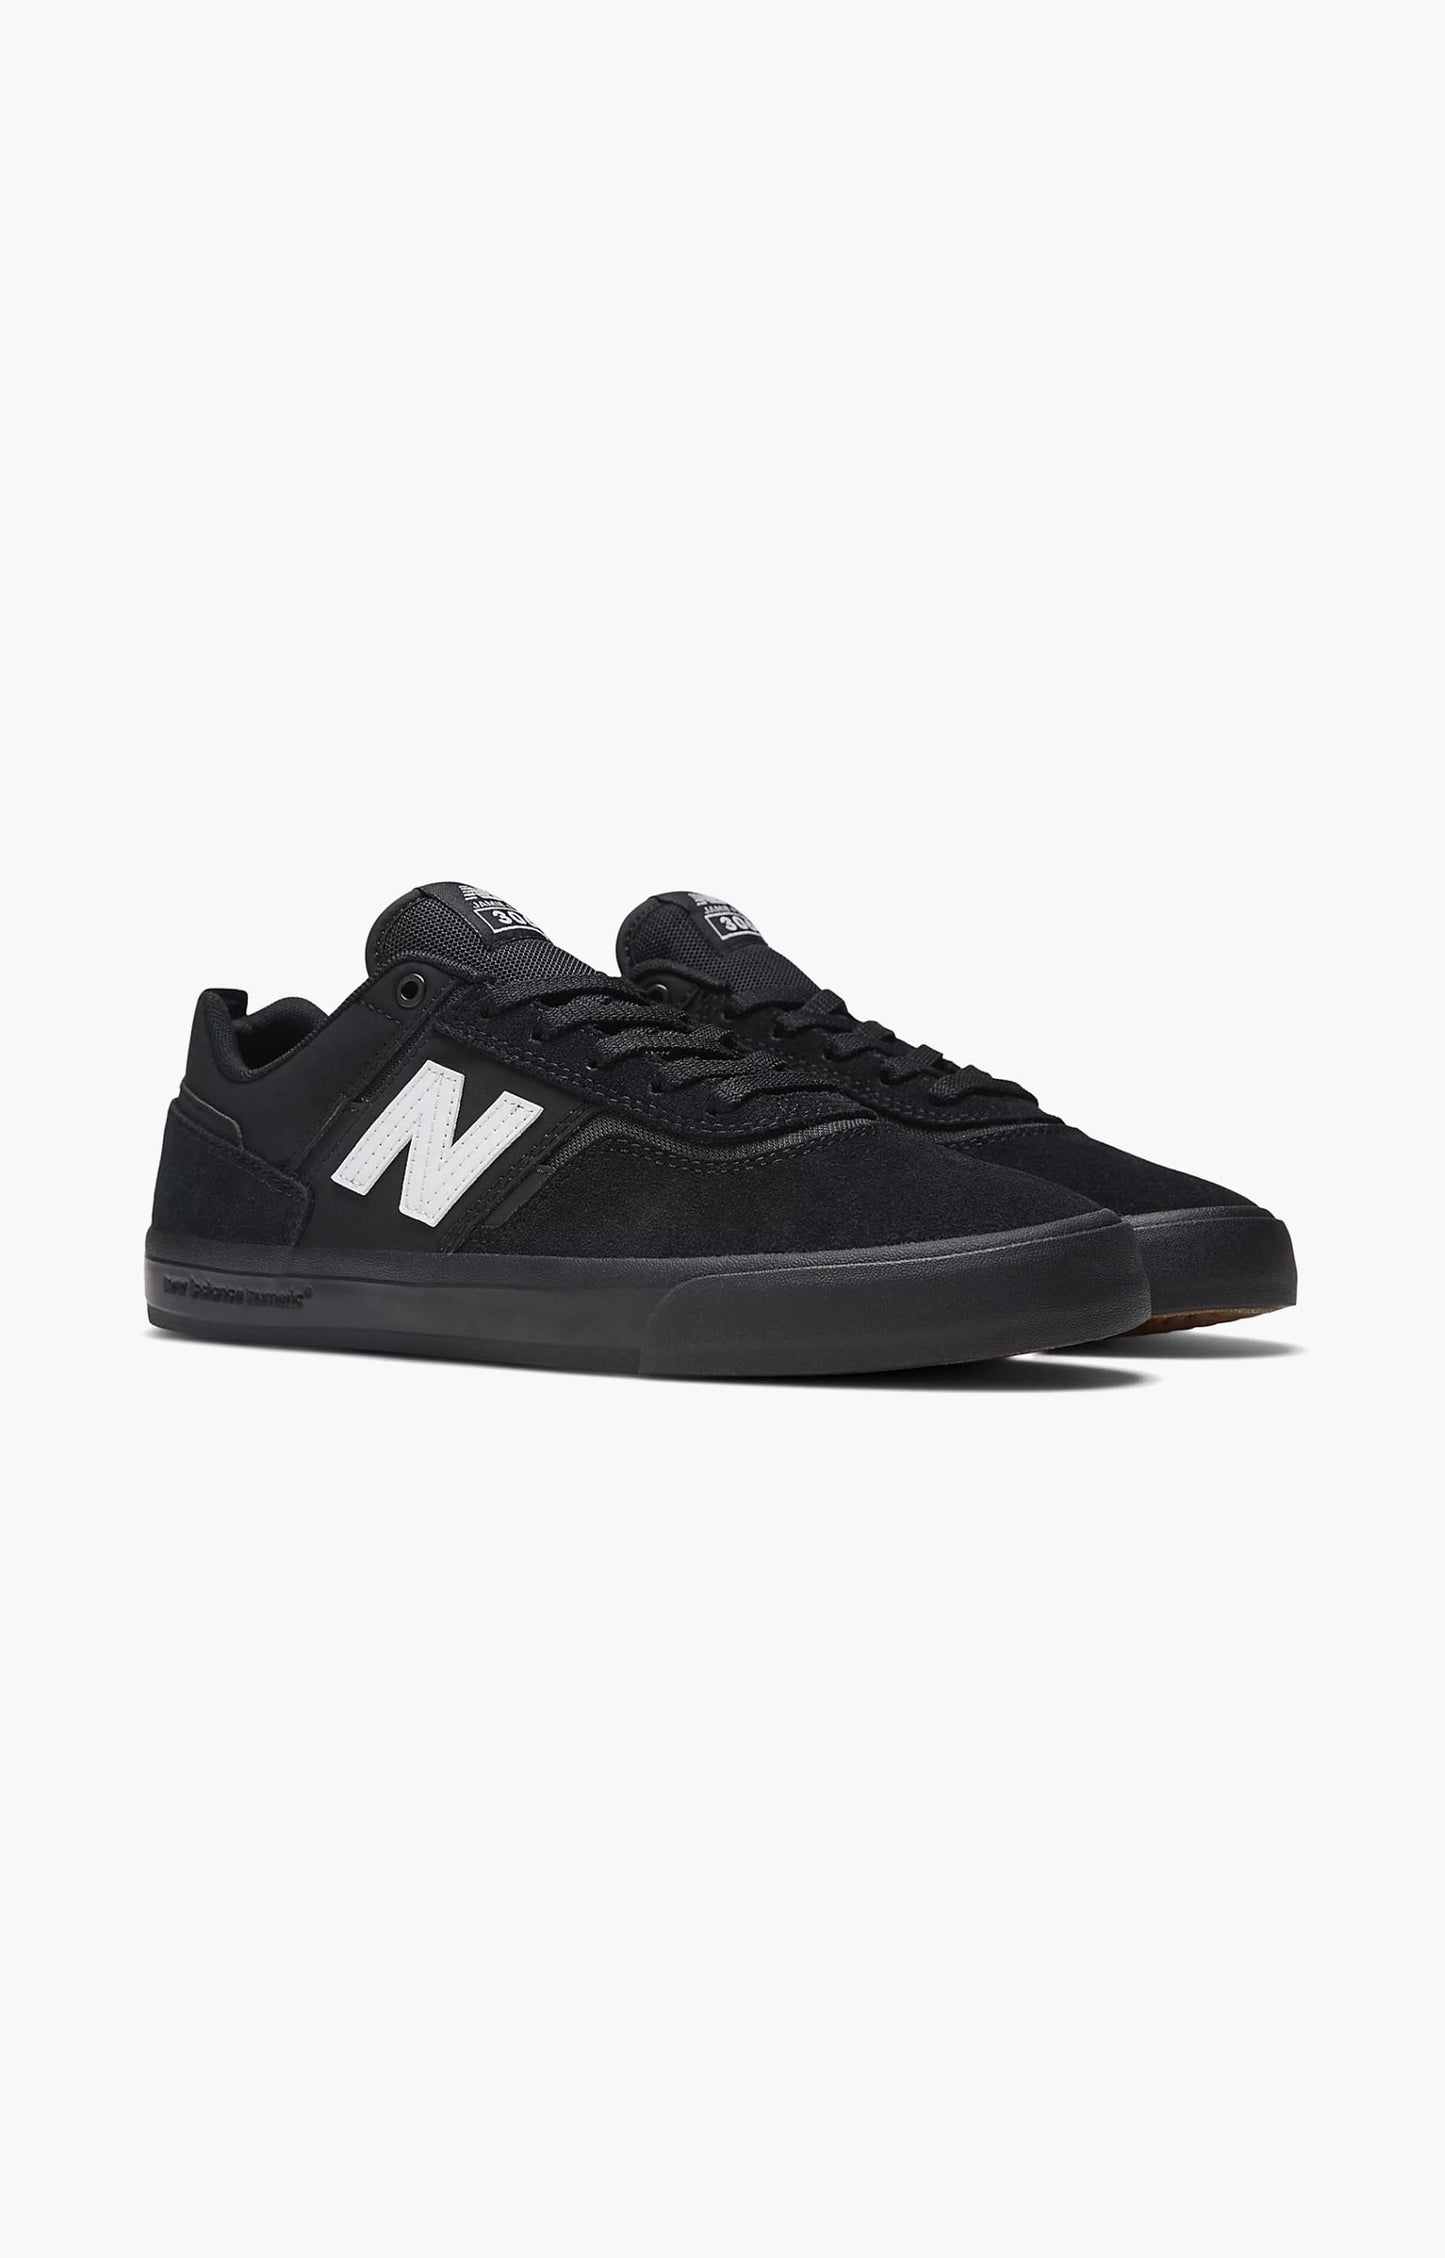 New Balance Numeric Jamie Foy NM306FDF Shoe, Black